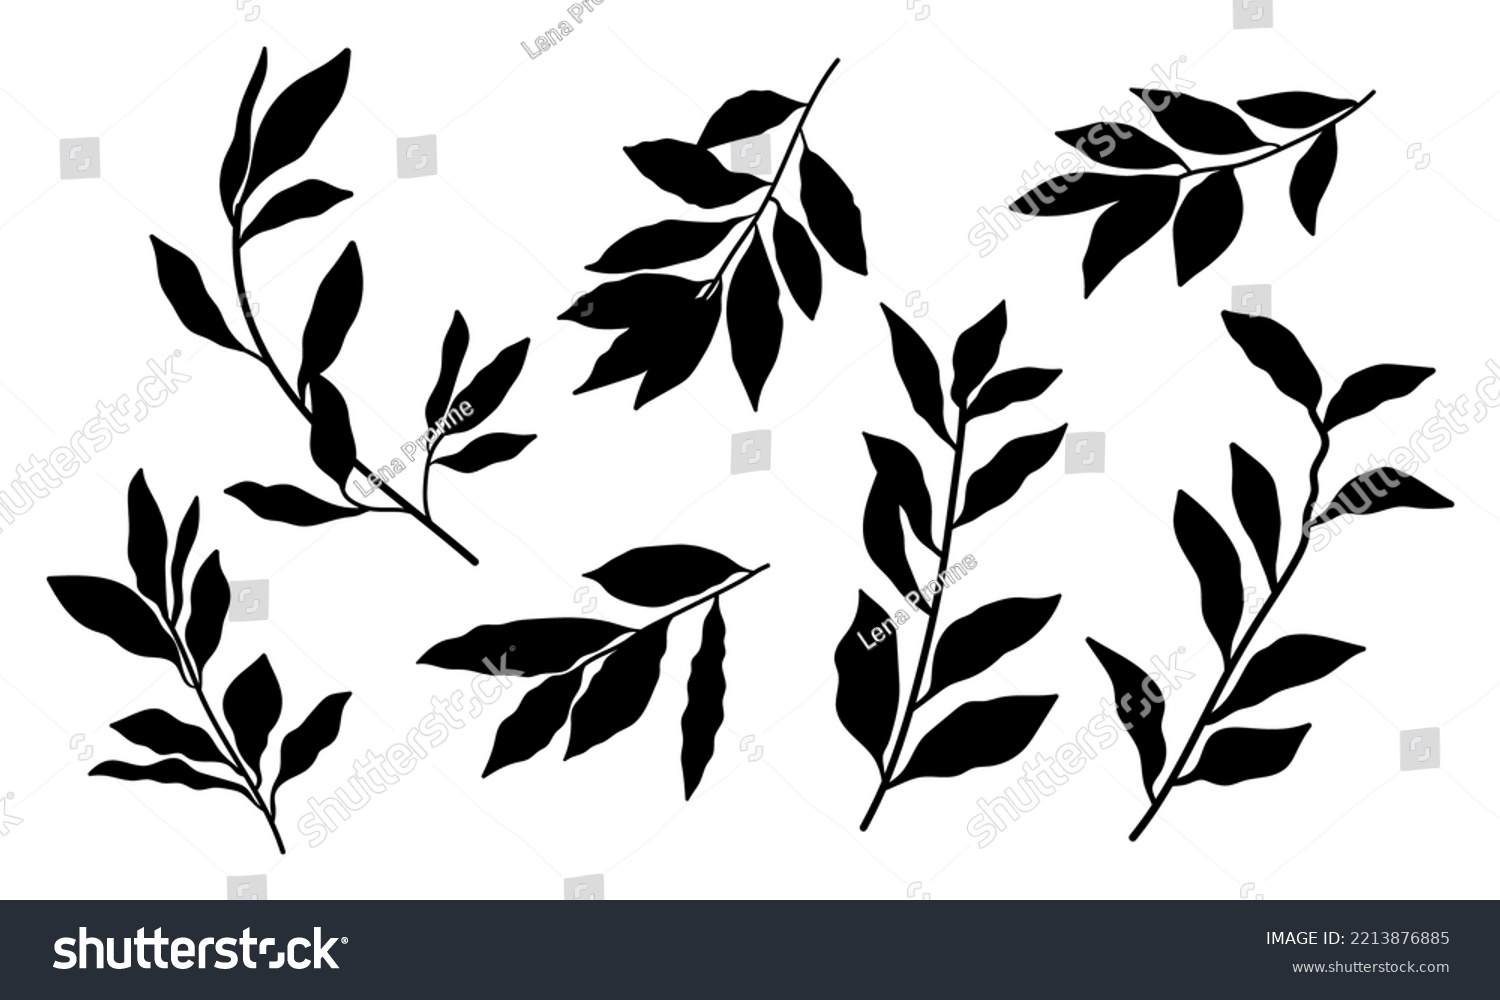 SVG of Bay laurel leaf branches, set stencil template for cutting programs svg